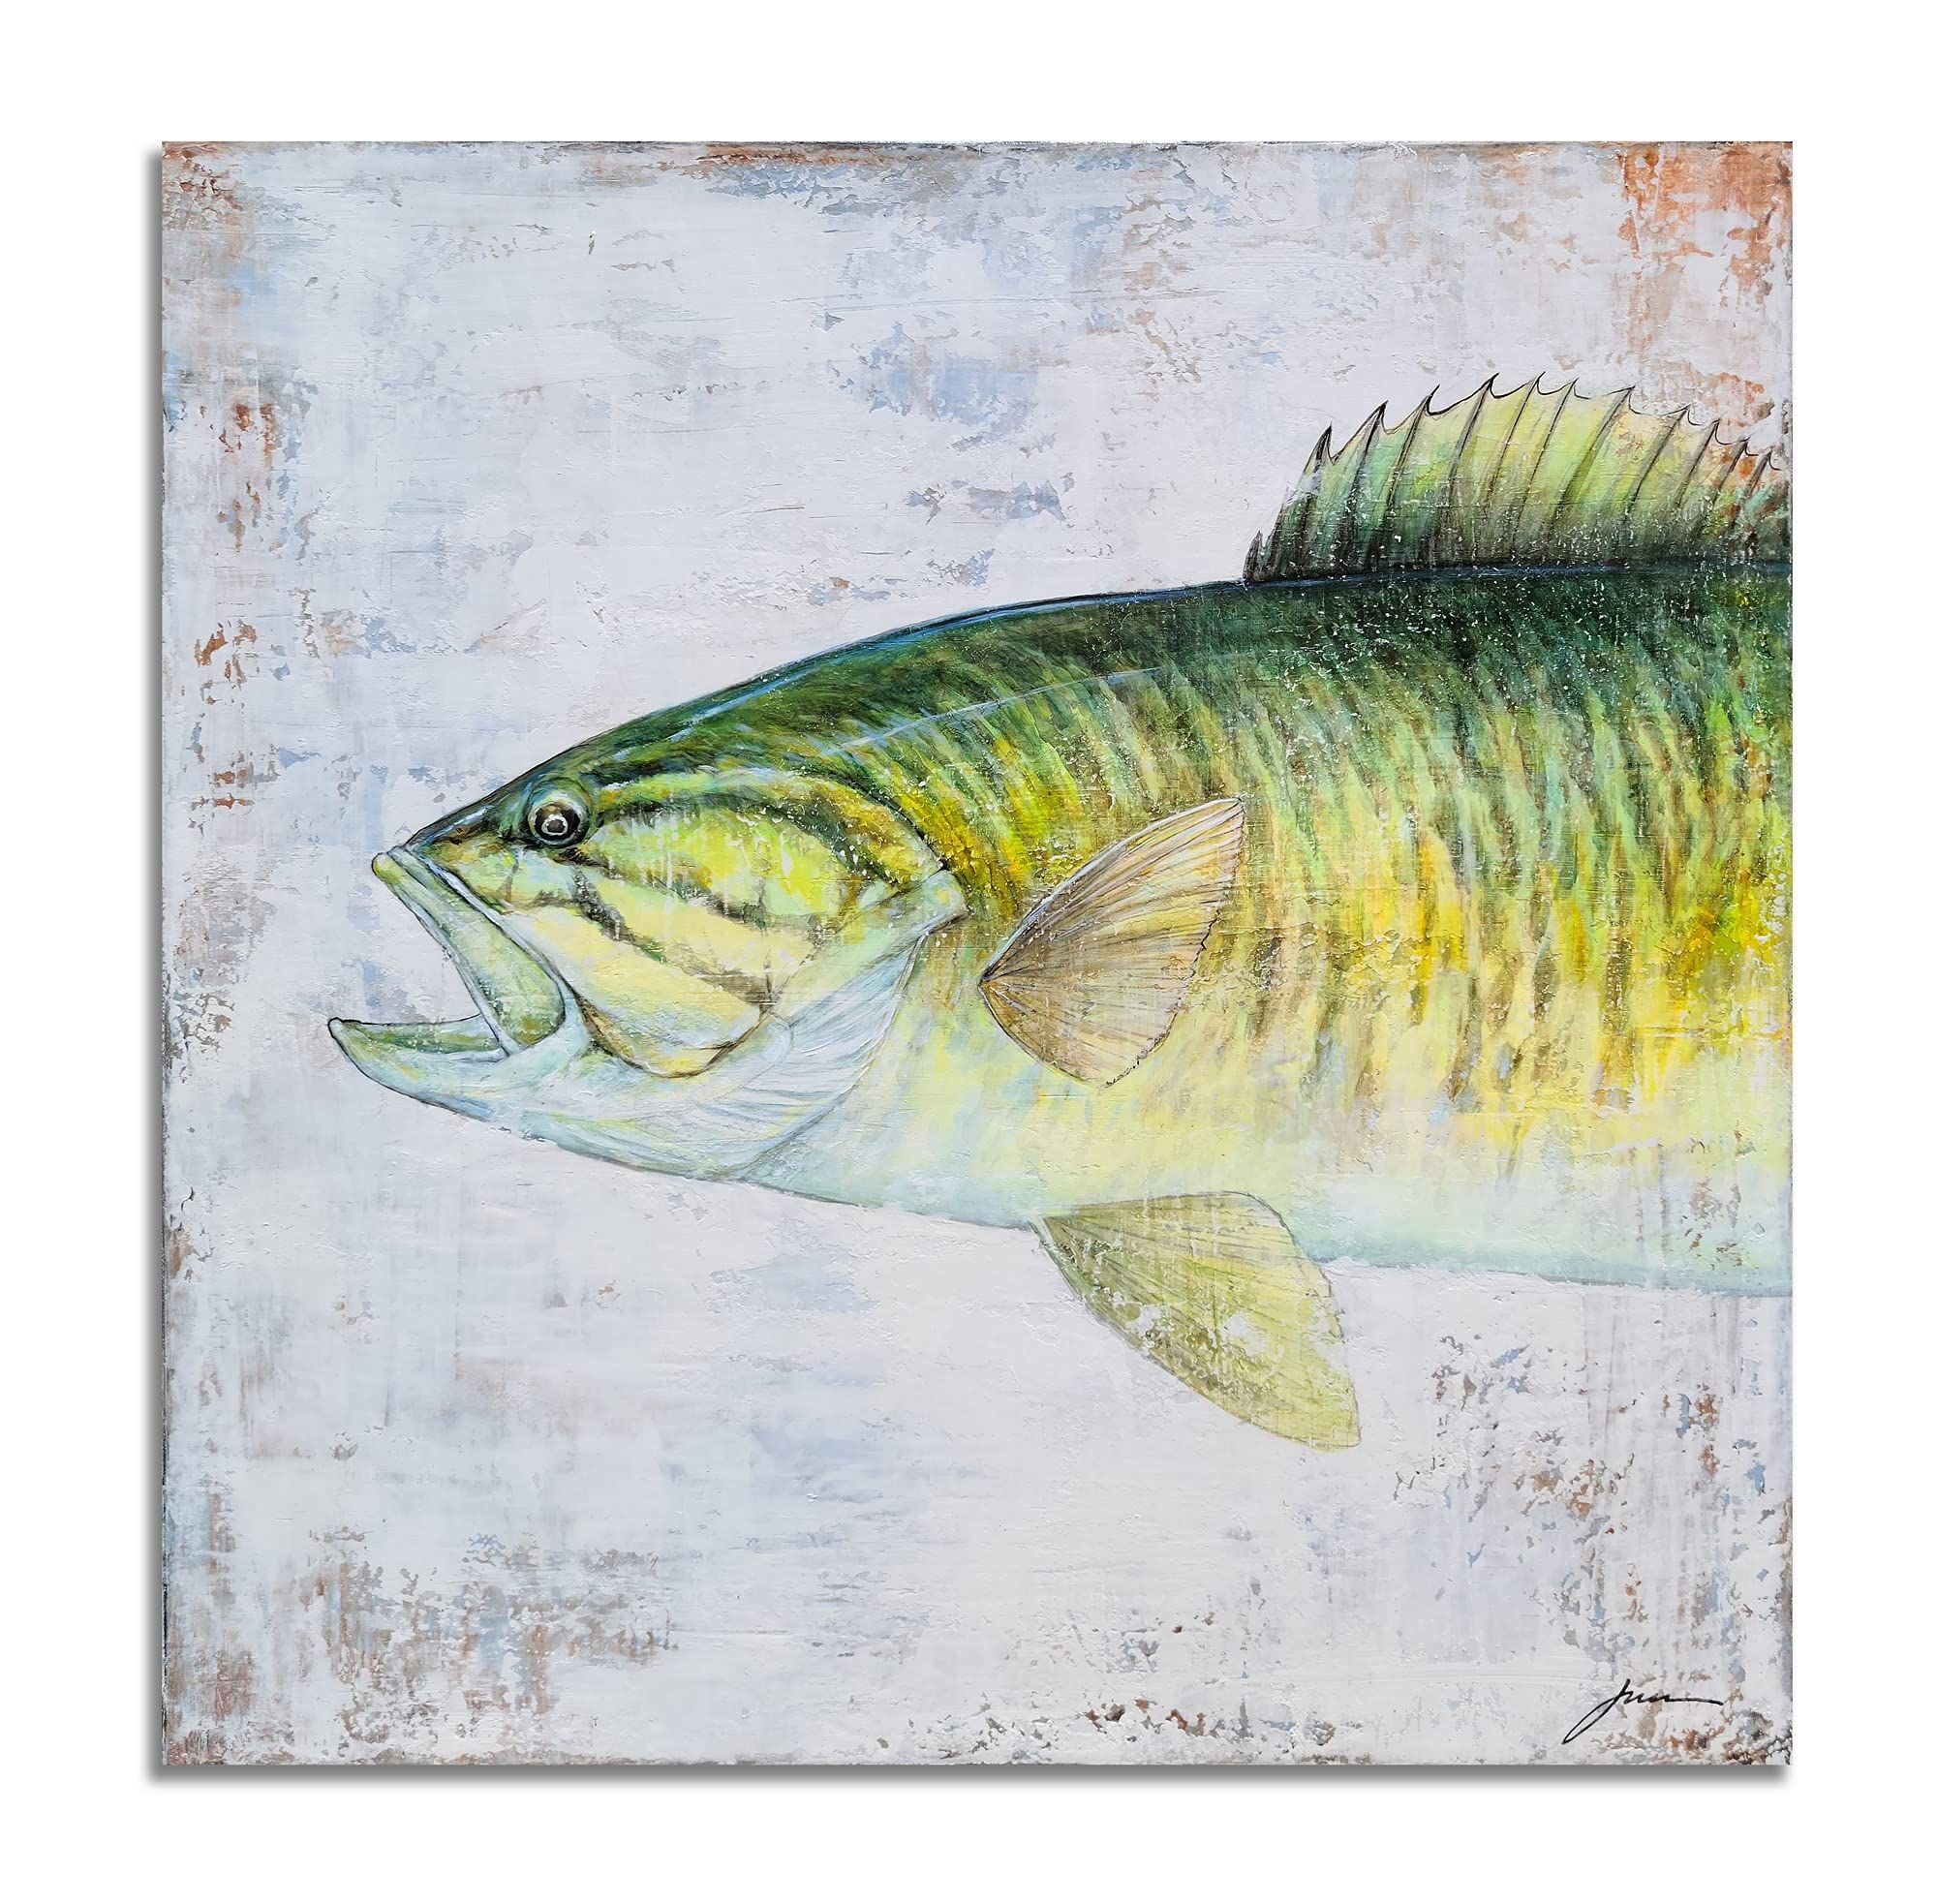 YHSKY ARTS Fish Canvas Wall Art with Textured - Modern Coastal Painting - Contemporary Sea Life Pict | Amazon (US)